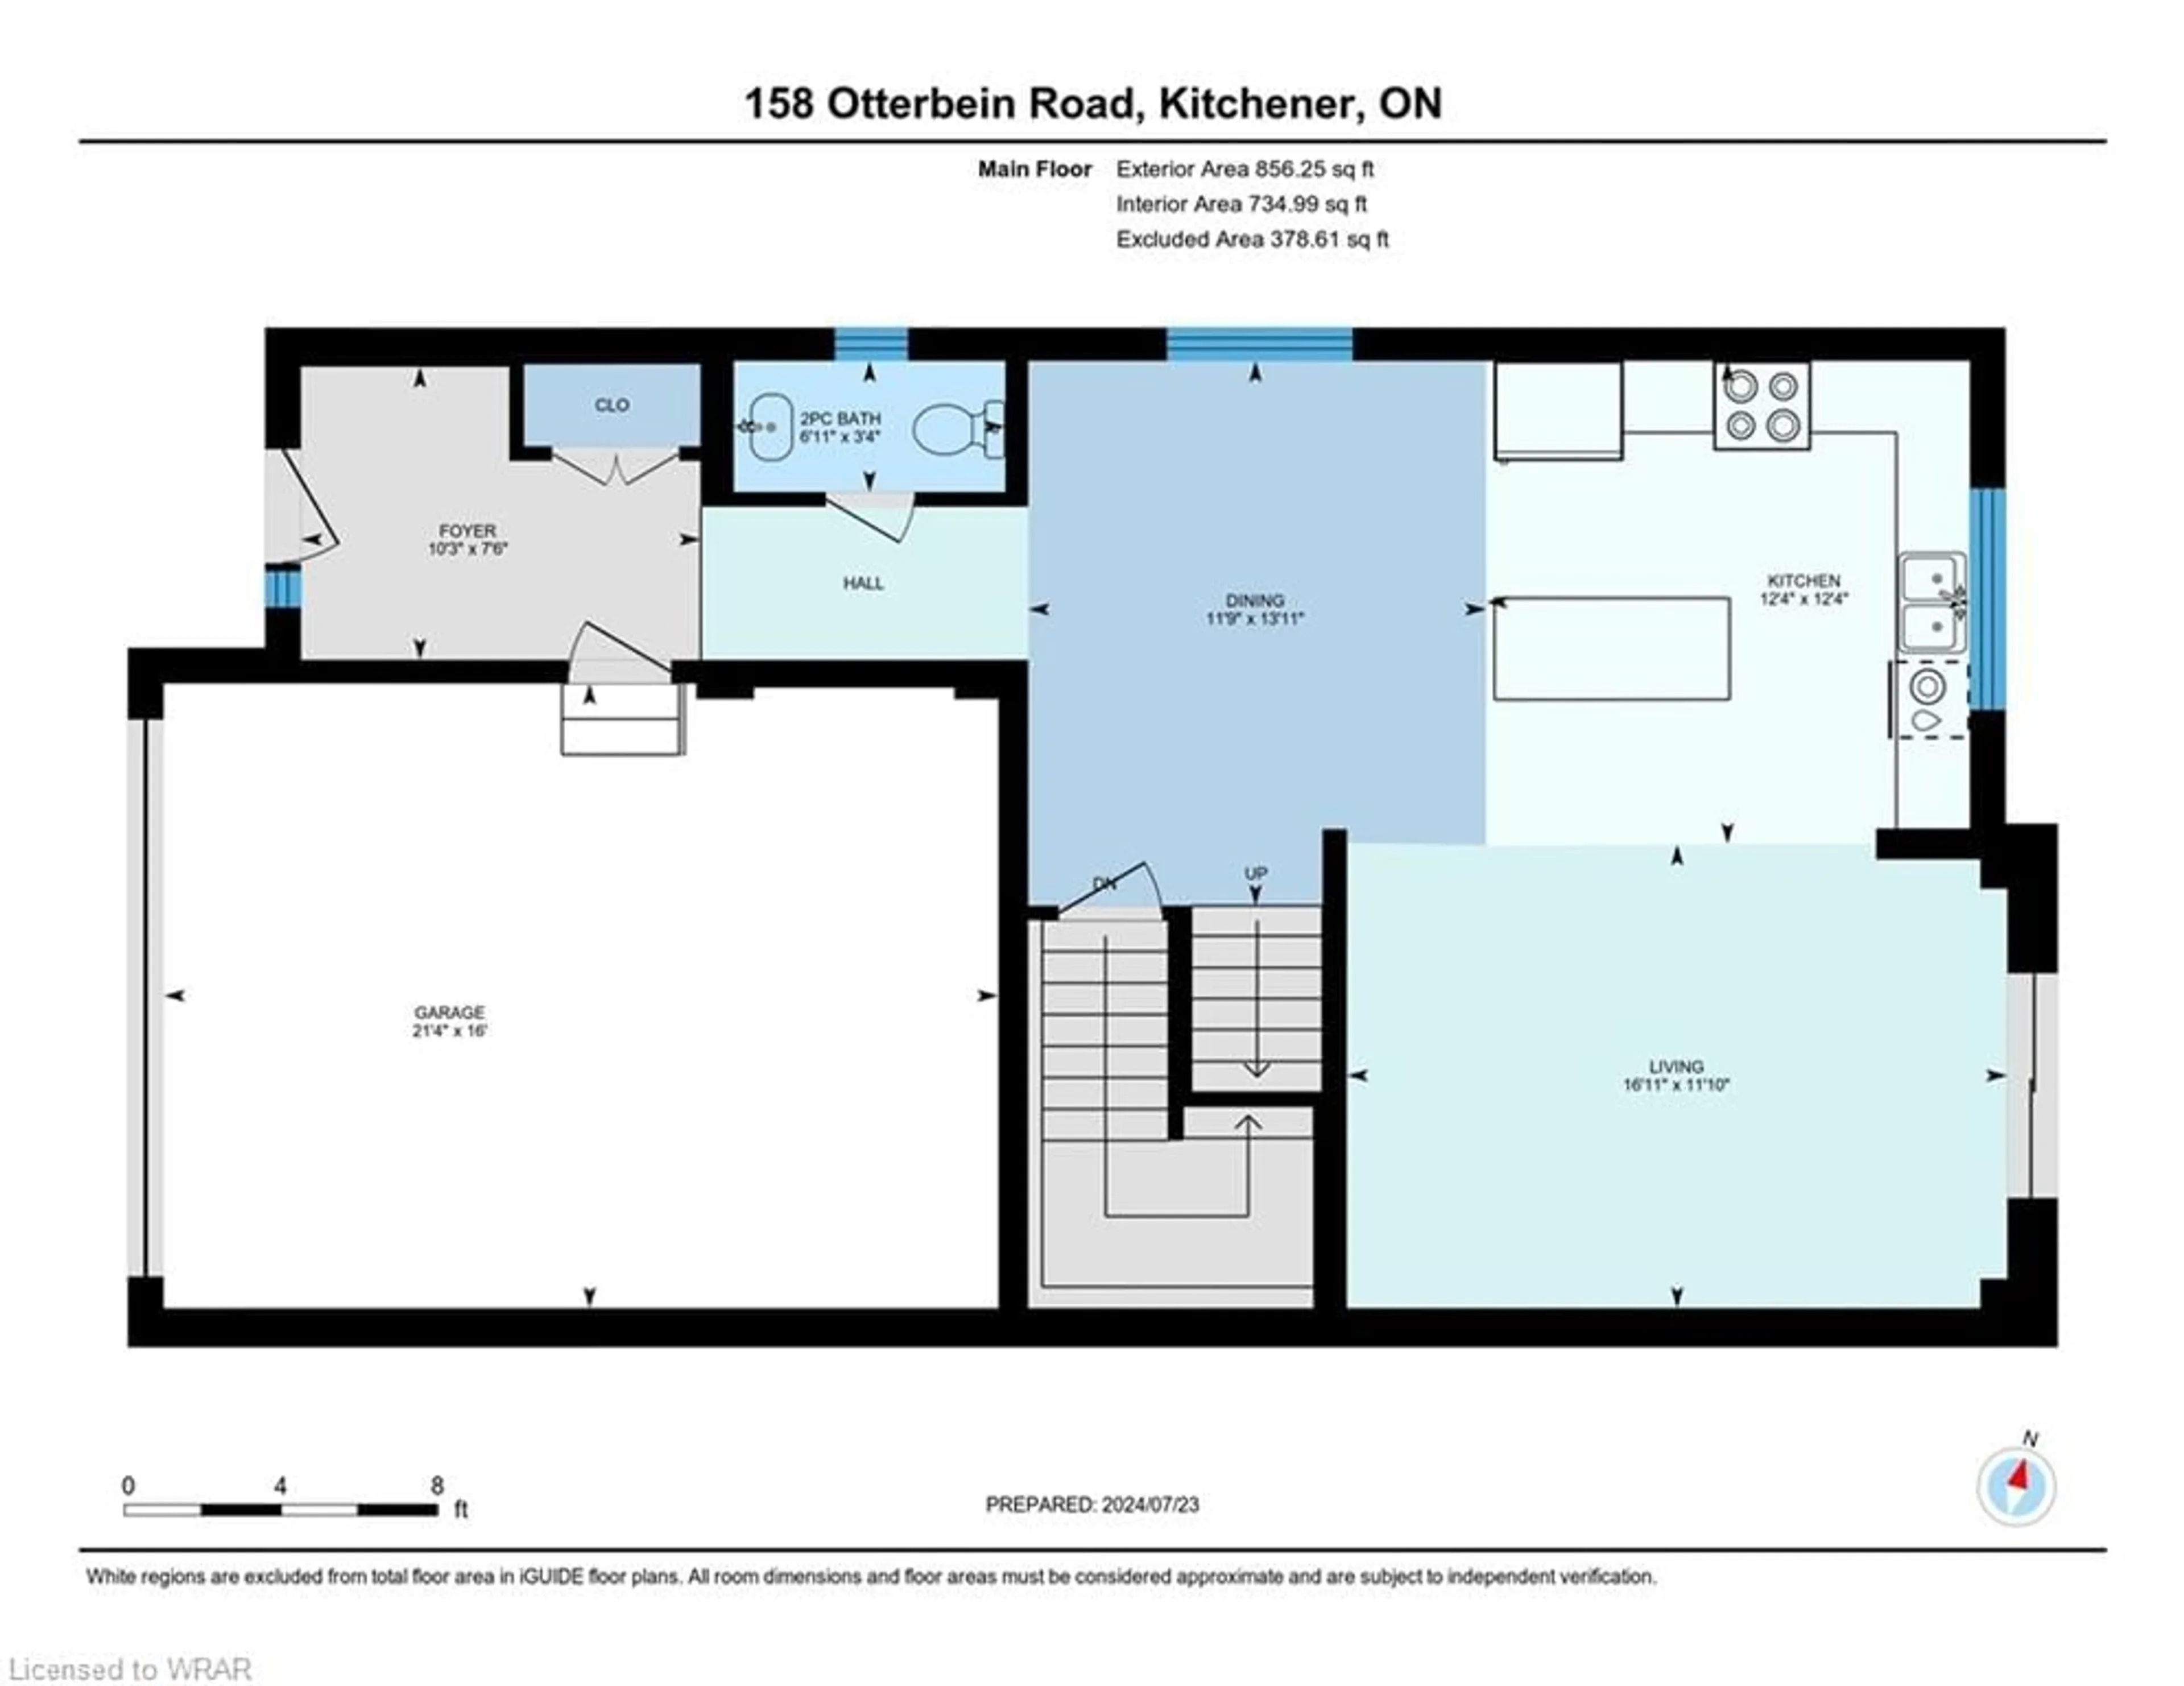 Floor plan for 158 Otterbein Rd, Kitchener Ontario N2B 0A8